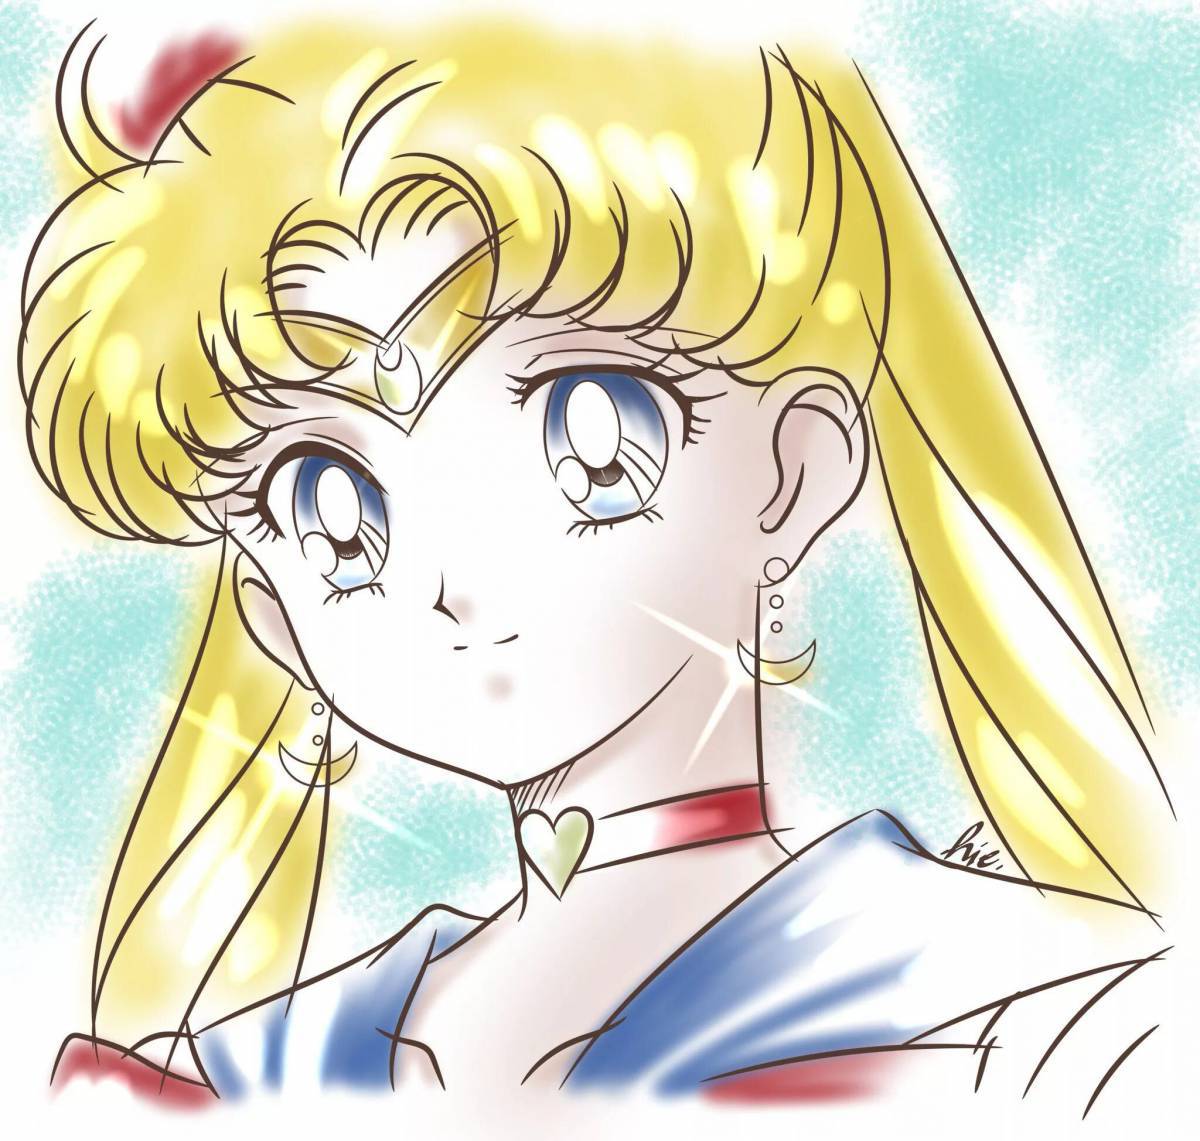 Sailor moon #19